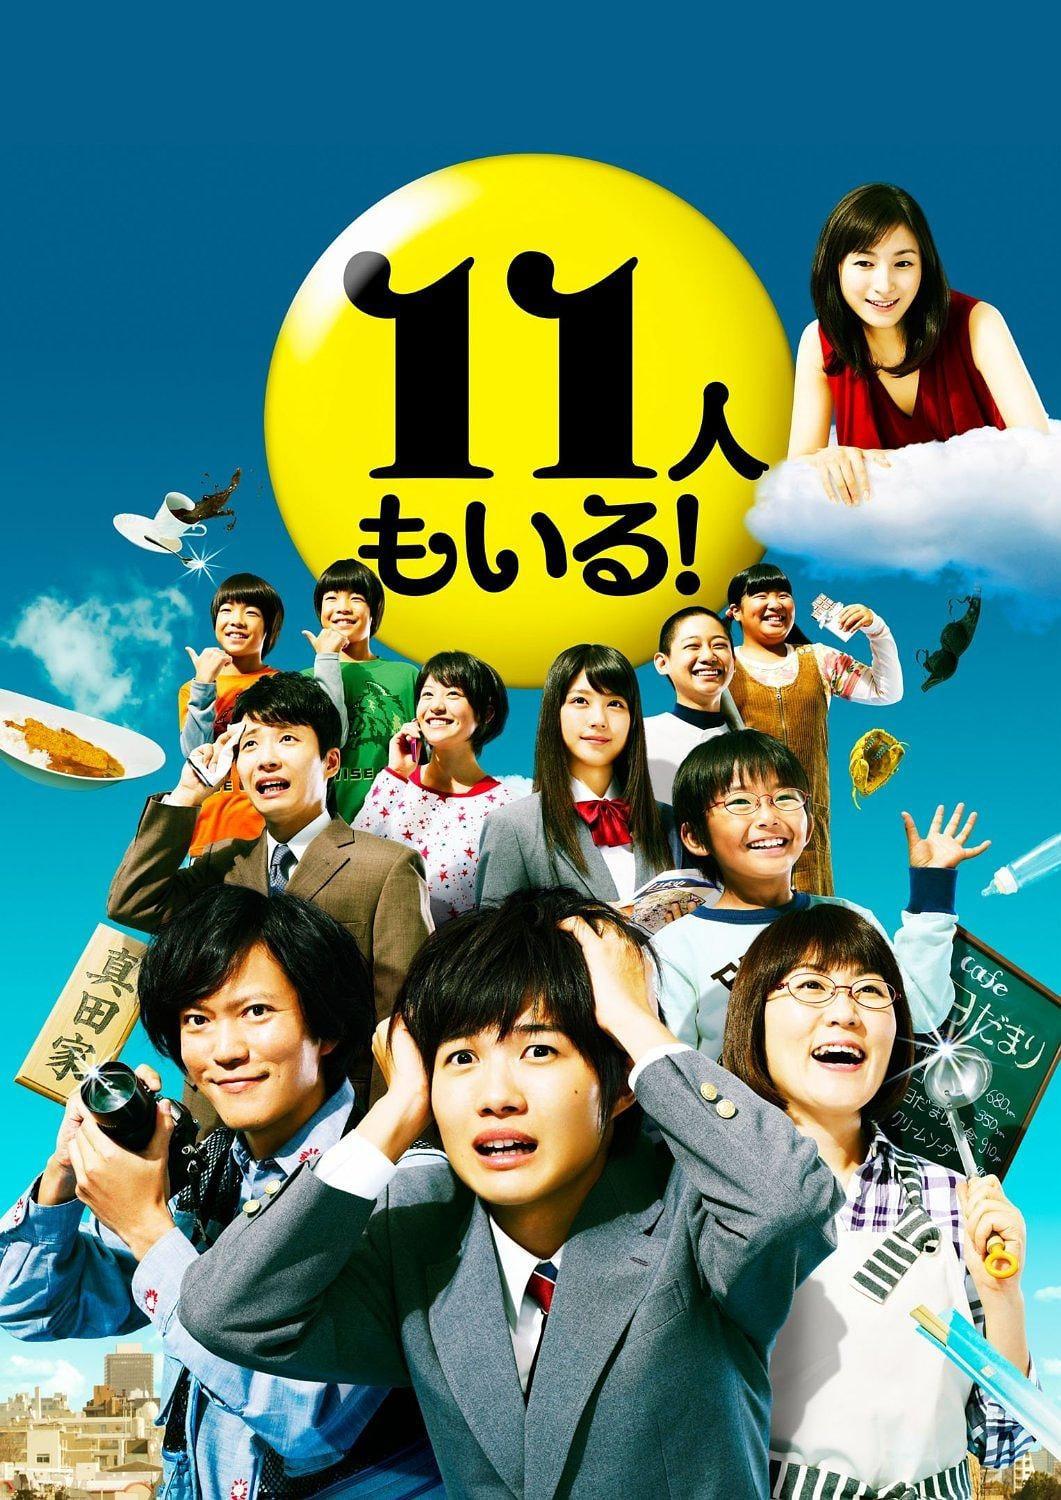 TV ratings for Odd Family 11 (11人もいる!) in South Africa. TV Asahi TV series